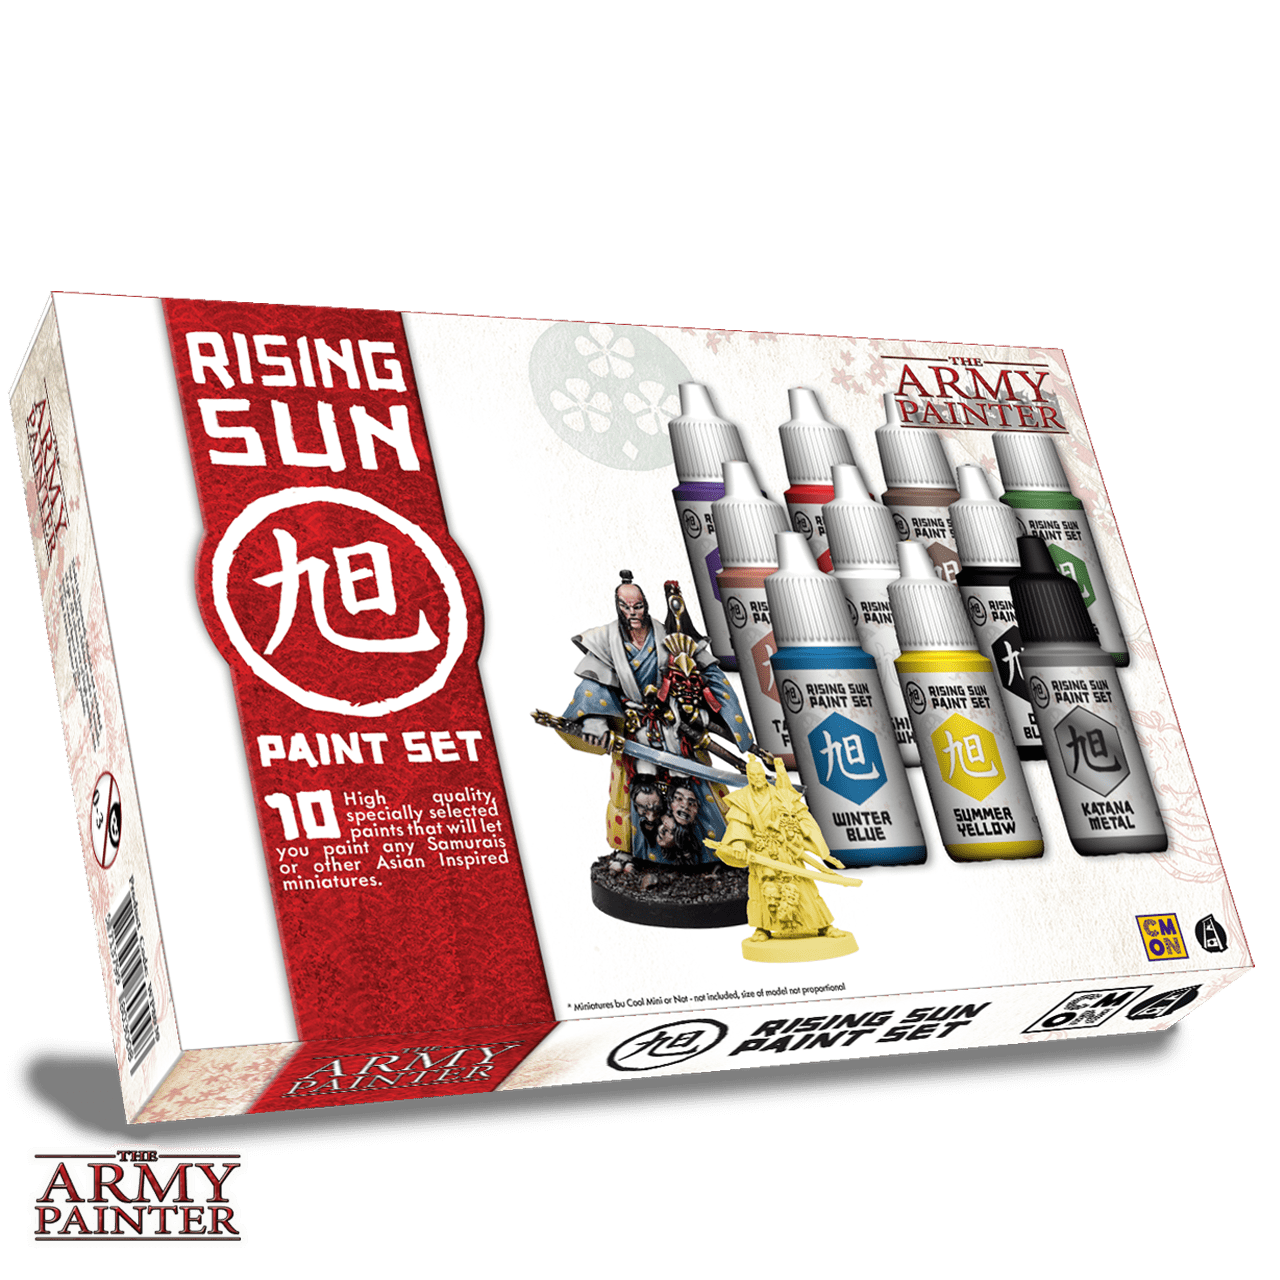 Rising Sun Paint Set *The Army Painter*